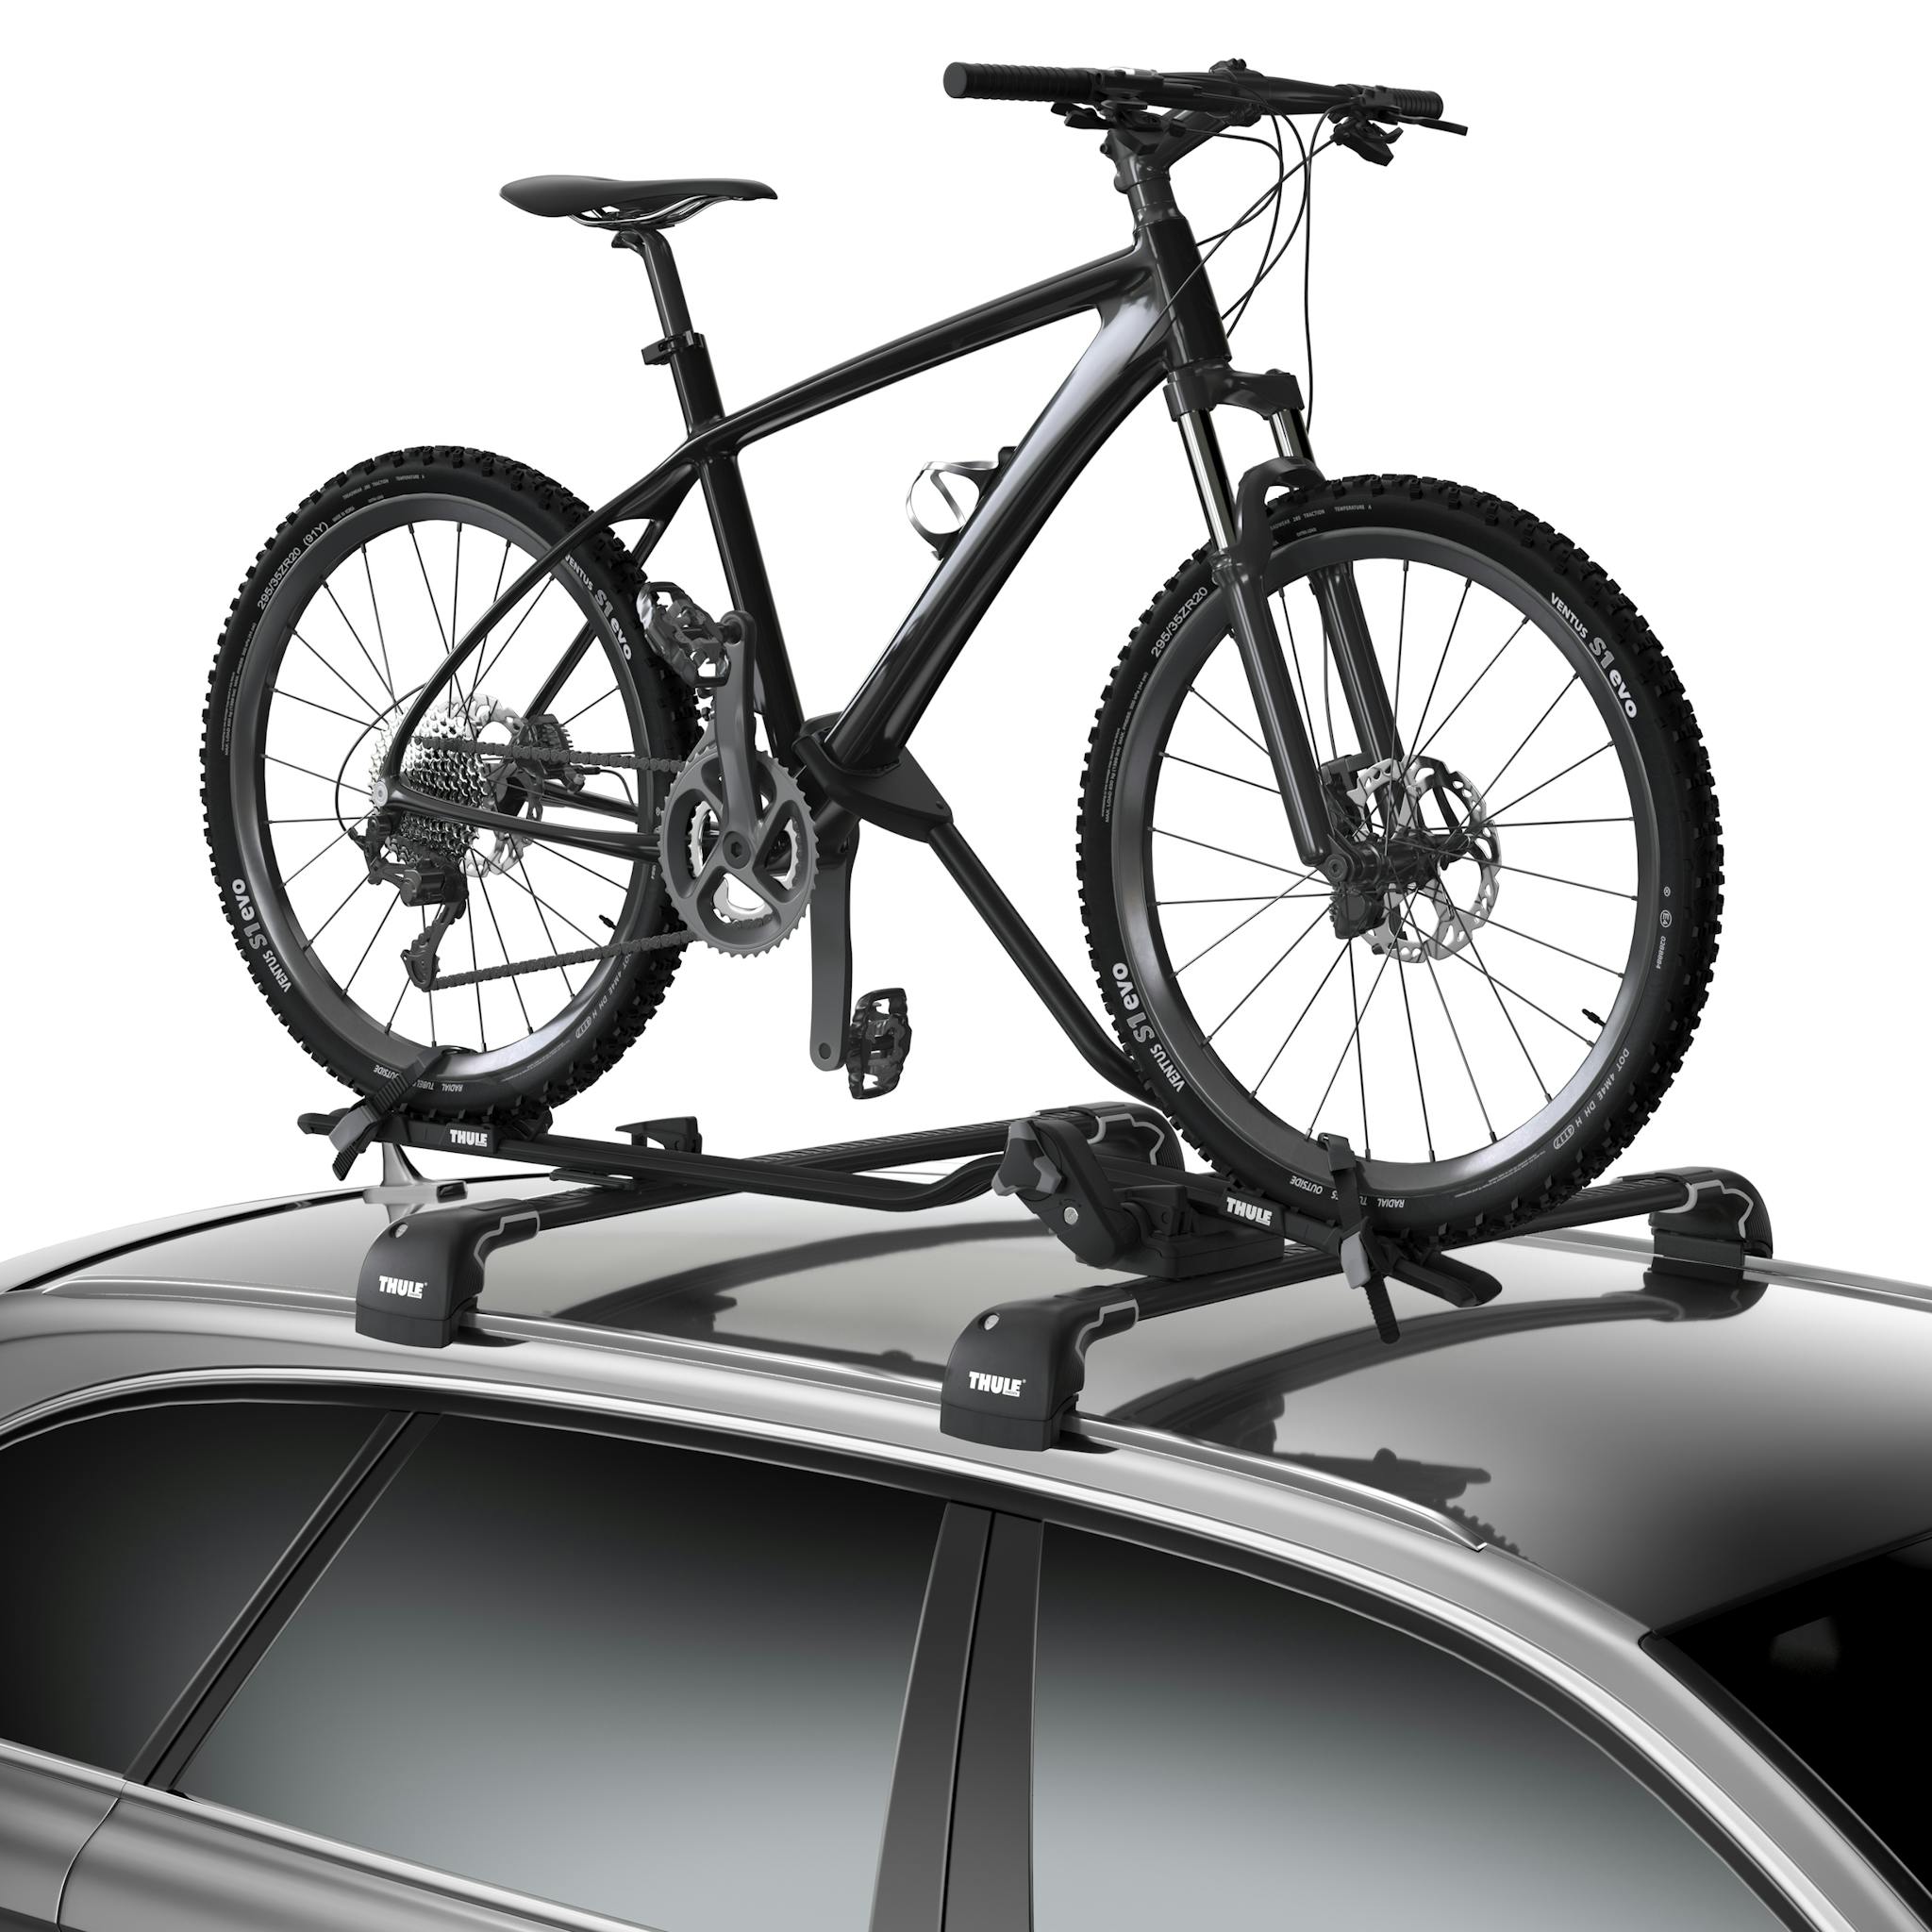 * Vertical Bike Rack | Buy Online & Save - Free Shipping